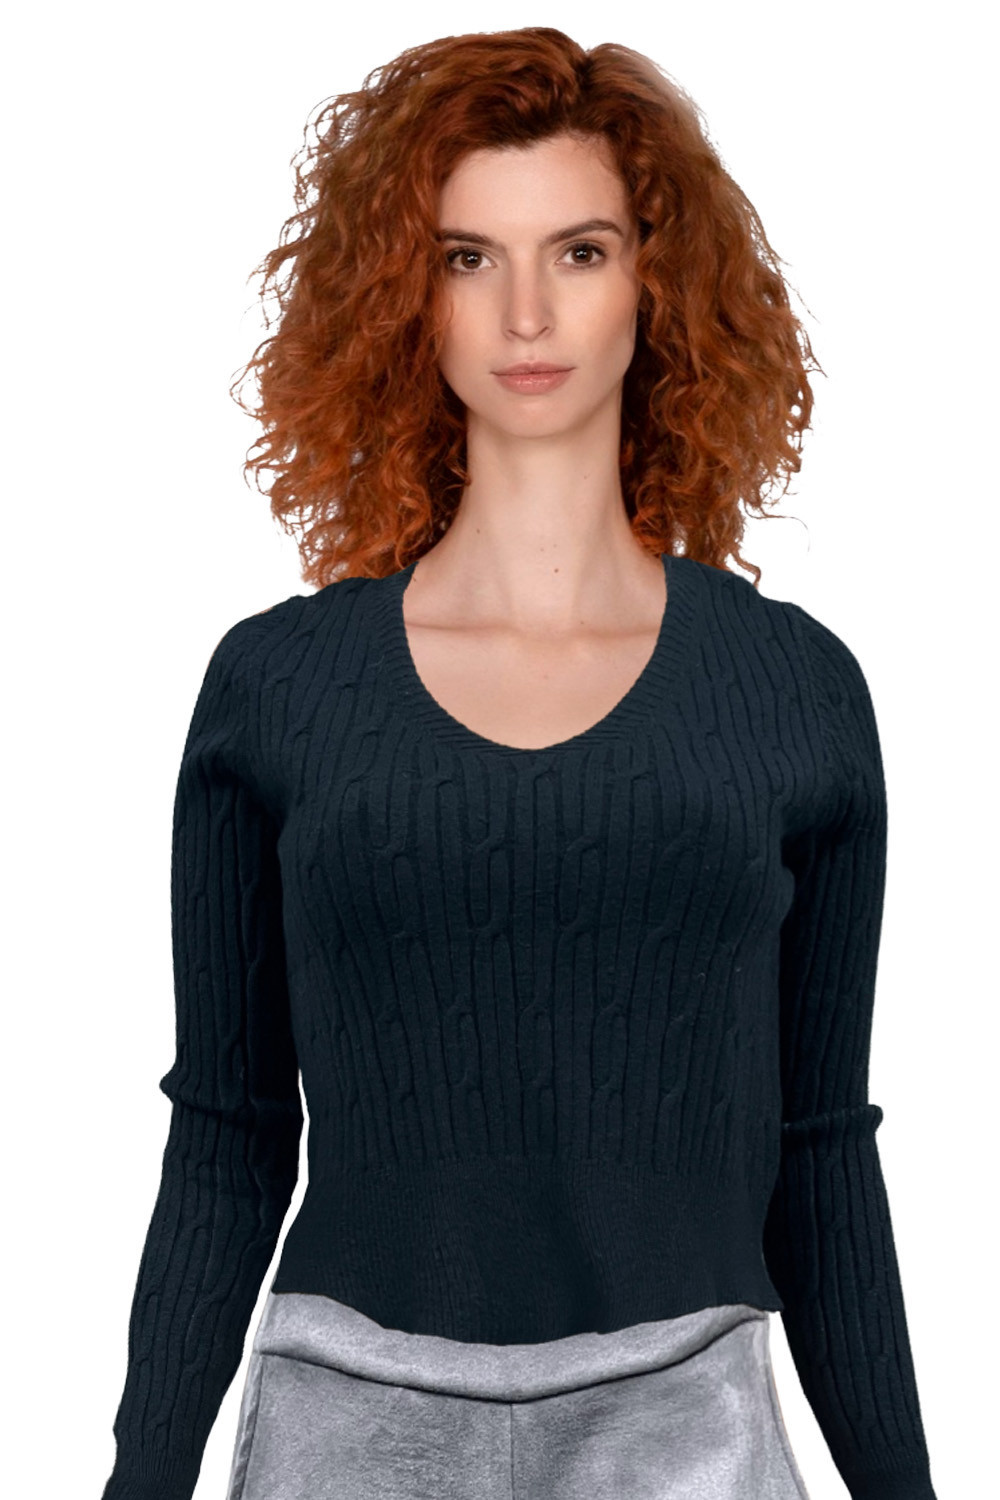 Black knit crop top - Women's fashion at low prices